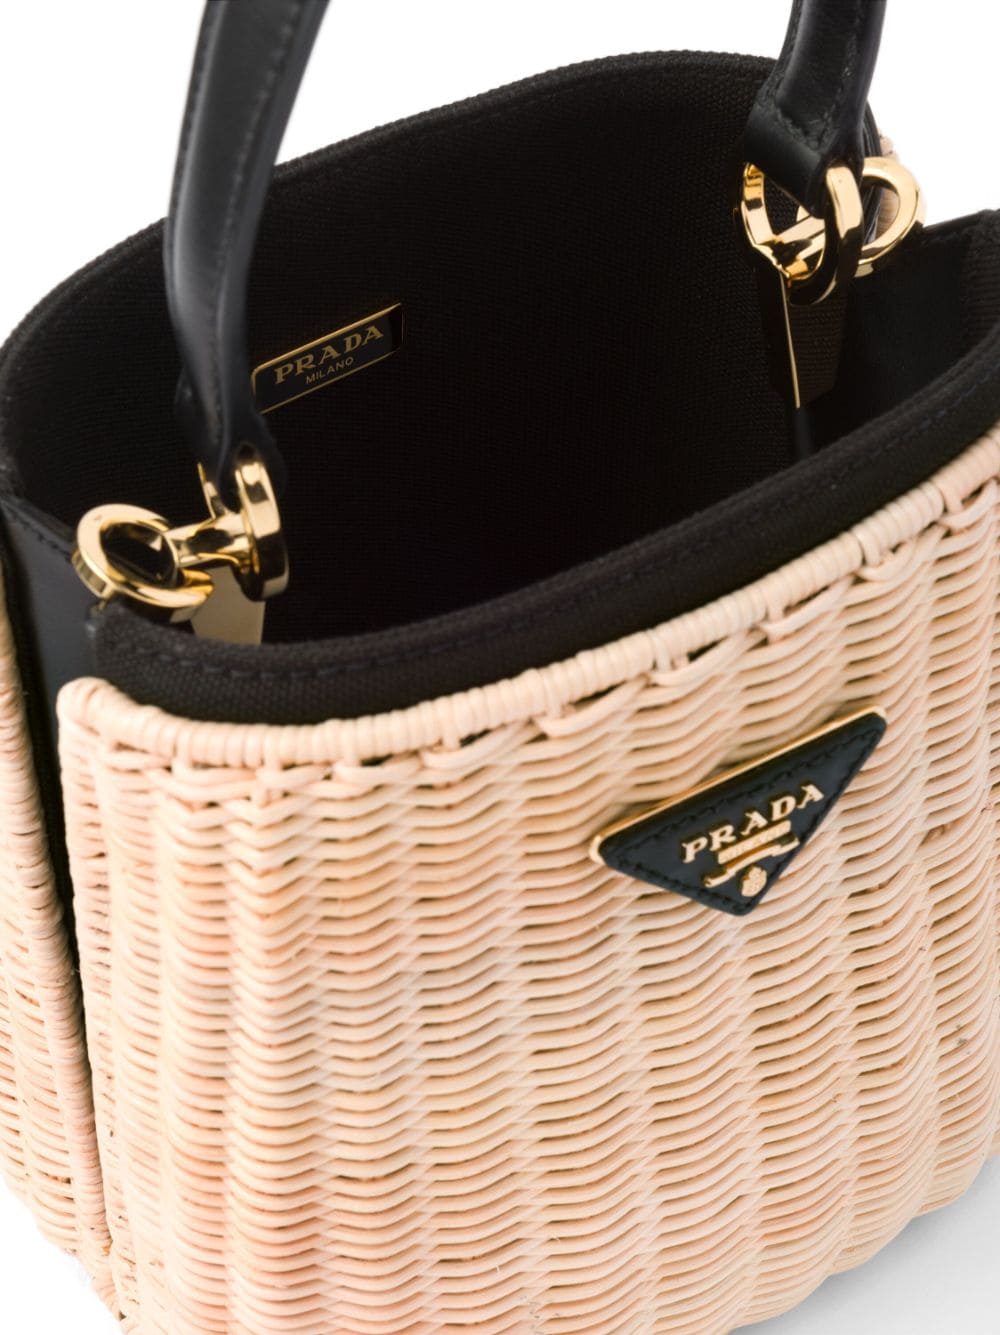 Prada Has Pair Of Wicker Bags That Are Wicked Cute - BAGAHOLICBOY